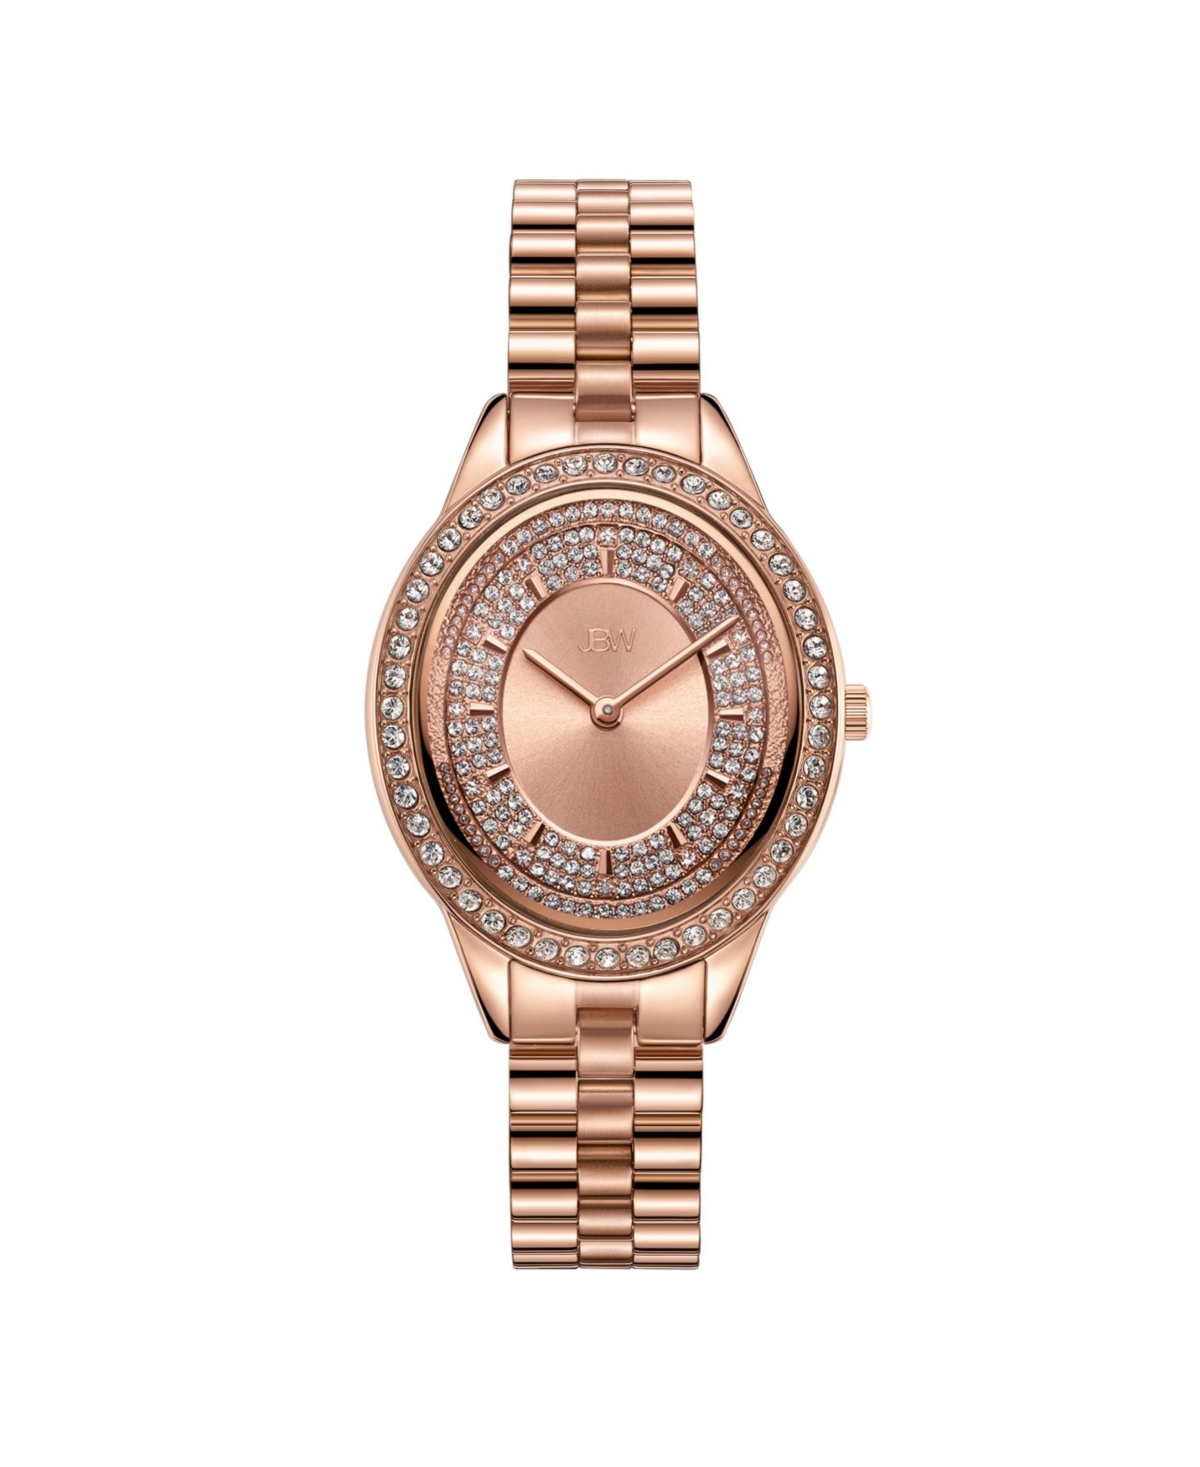 Women's Bellini Diamond (1/8 ct. t.w.) Watch in 18k Rose Gold-plated Stainless-steel Watch 30 Mm - Gold